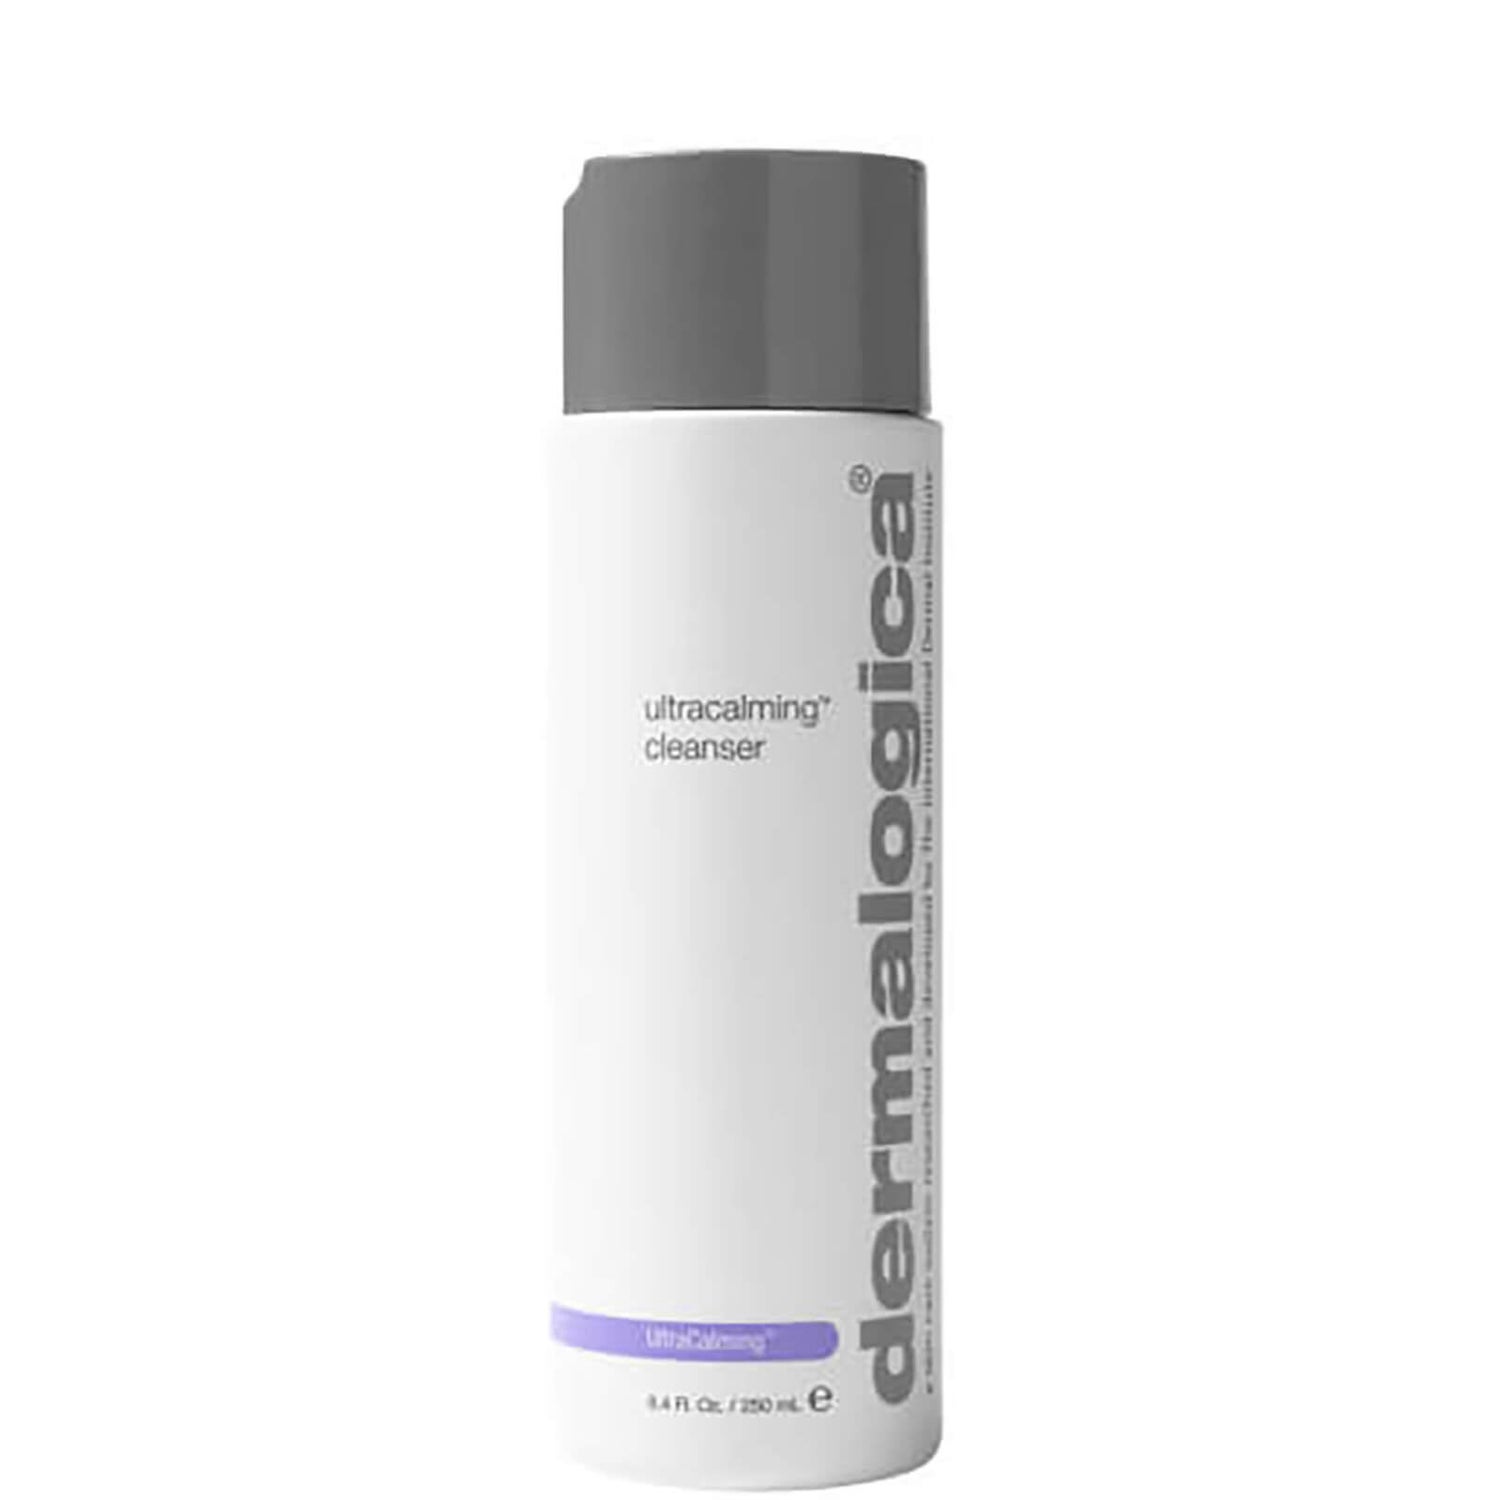 Dermalogica Ultracalming Cleanser (250 ml)